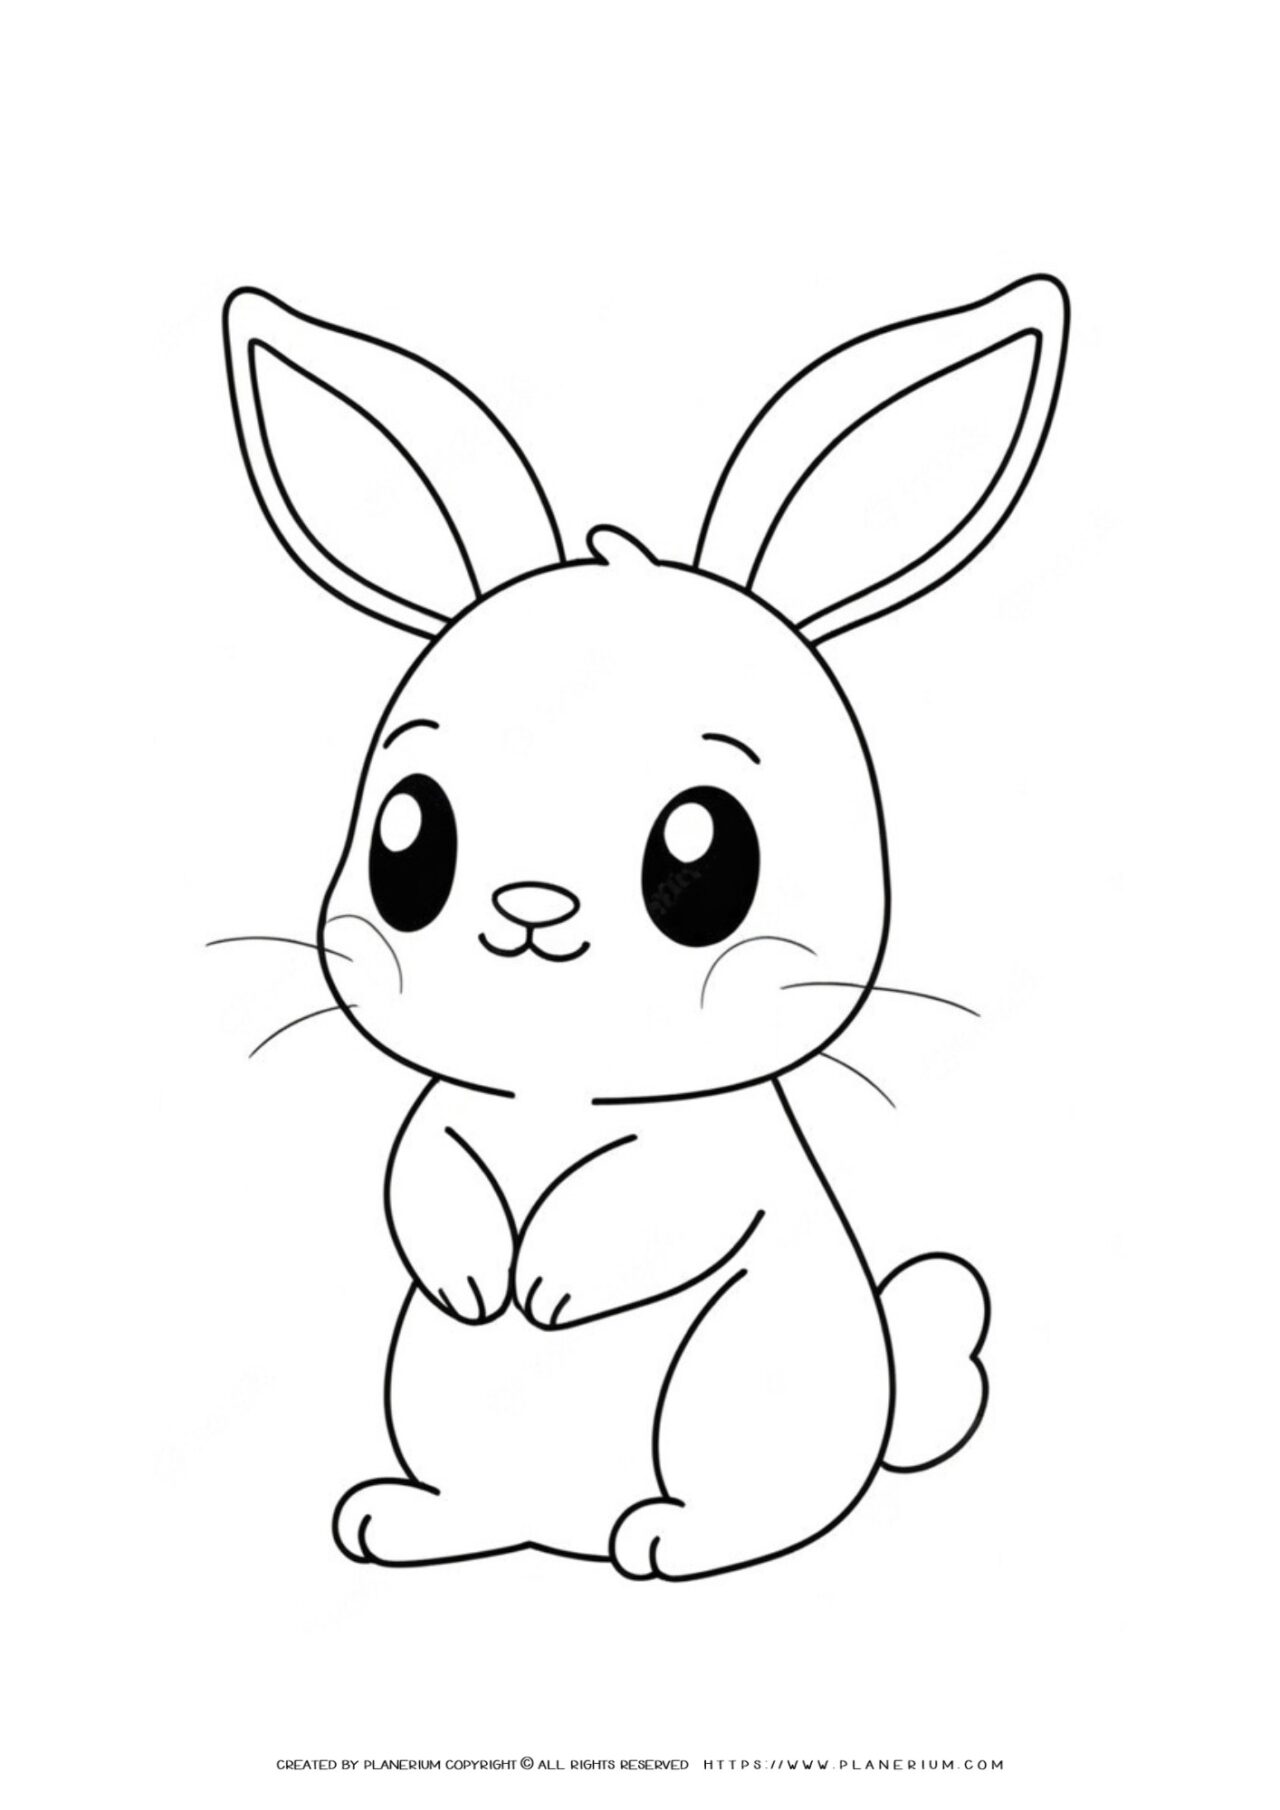 Cute cartoon rabbit line art illustration.